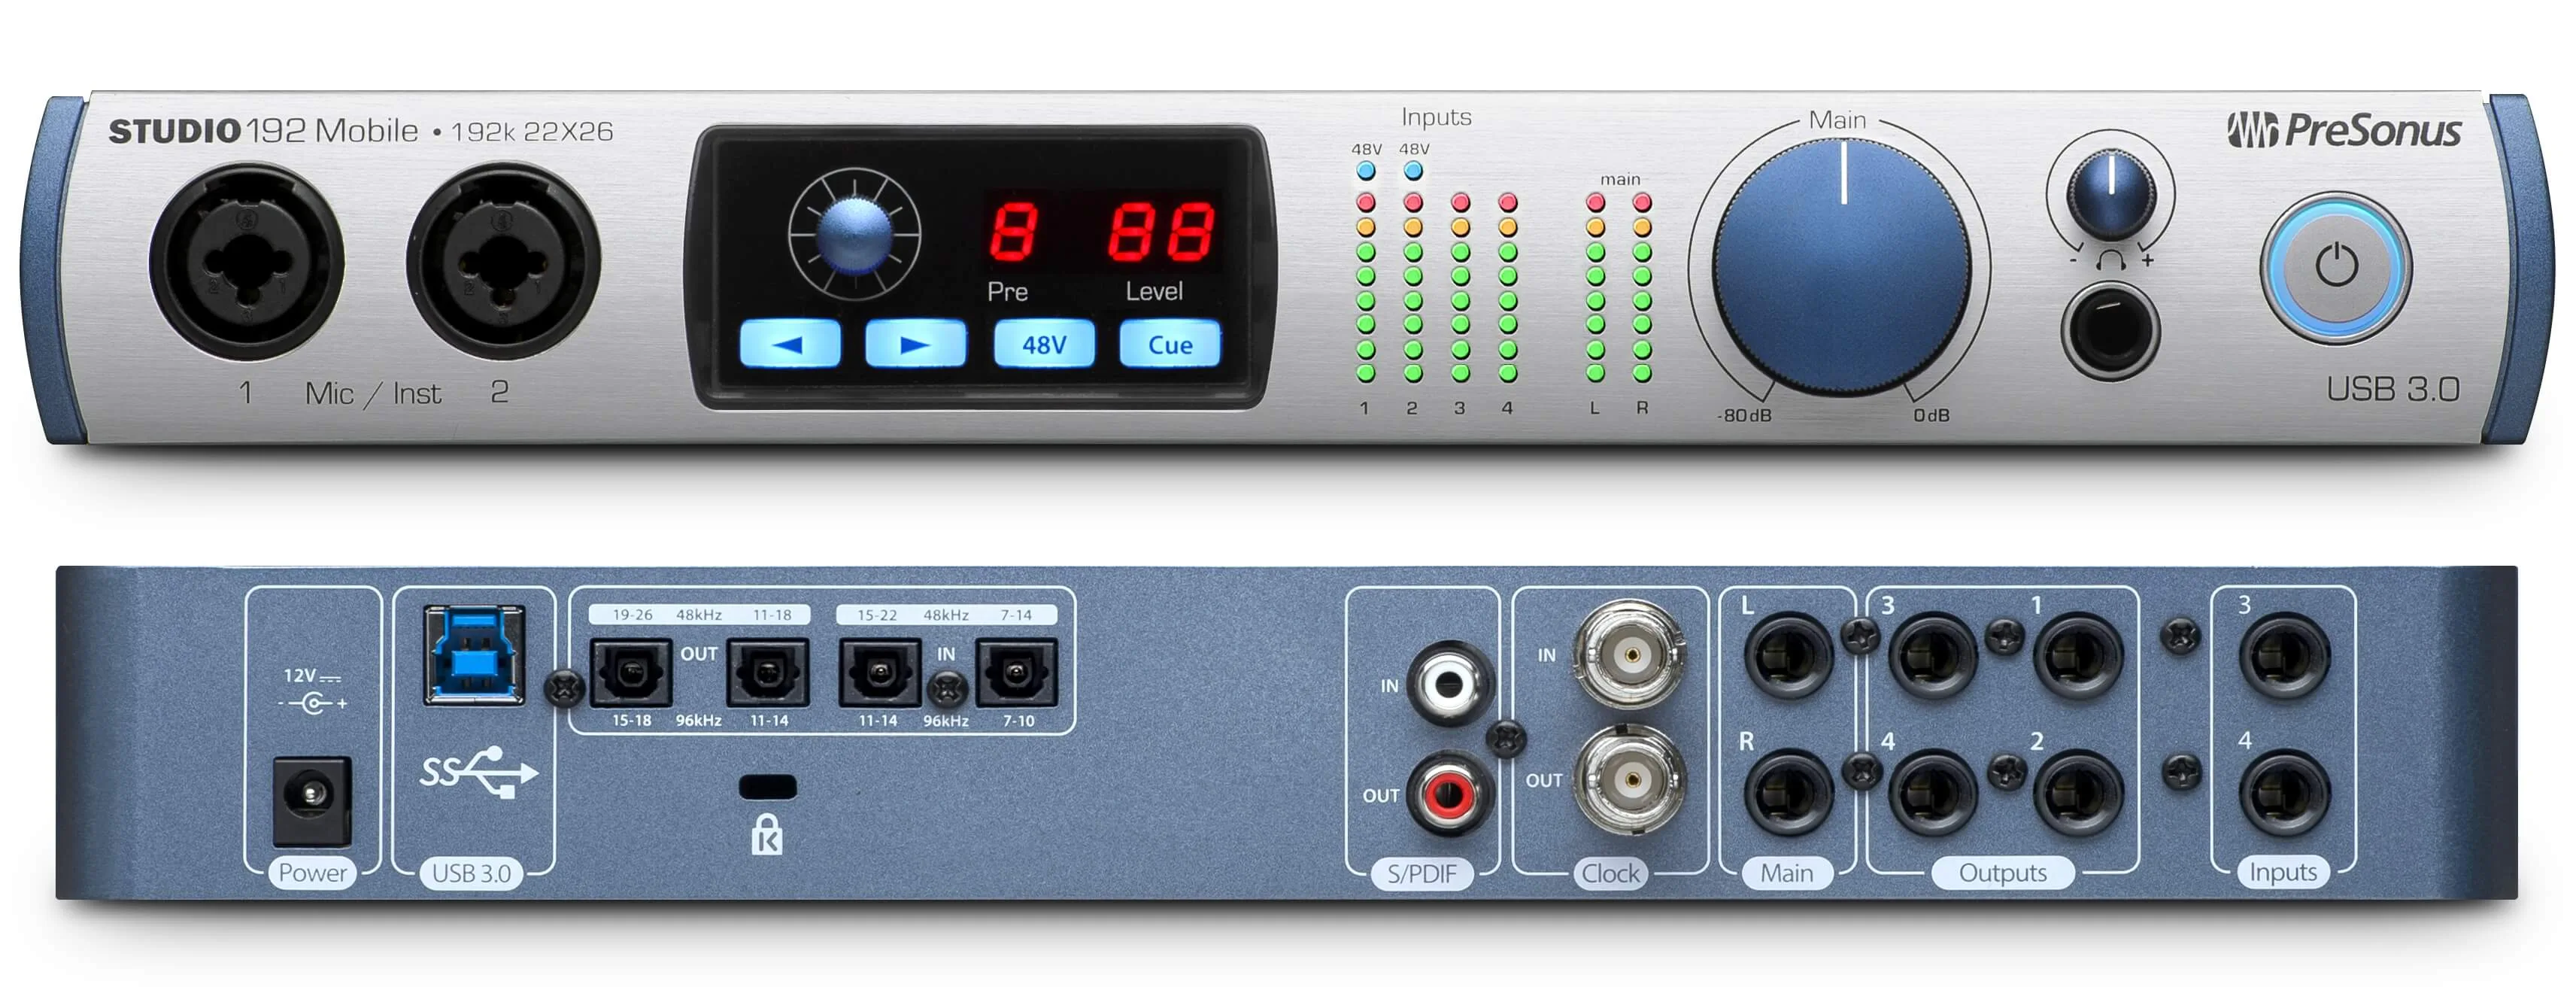 PreSonus Studio 192 Mobile audio interface/studio command center